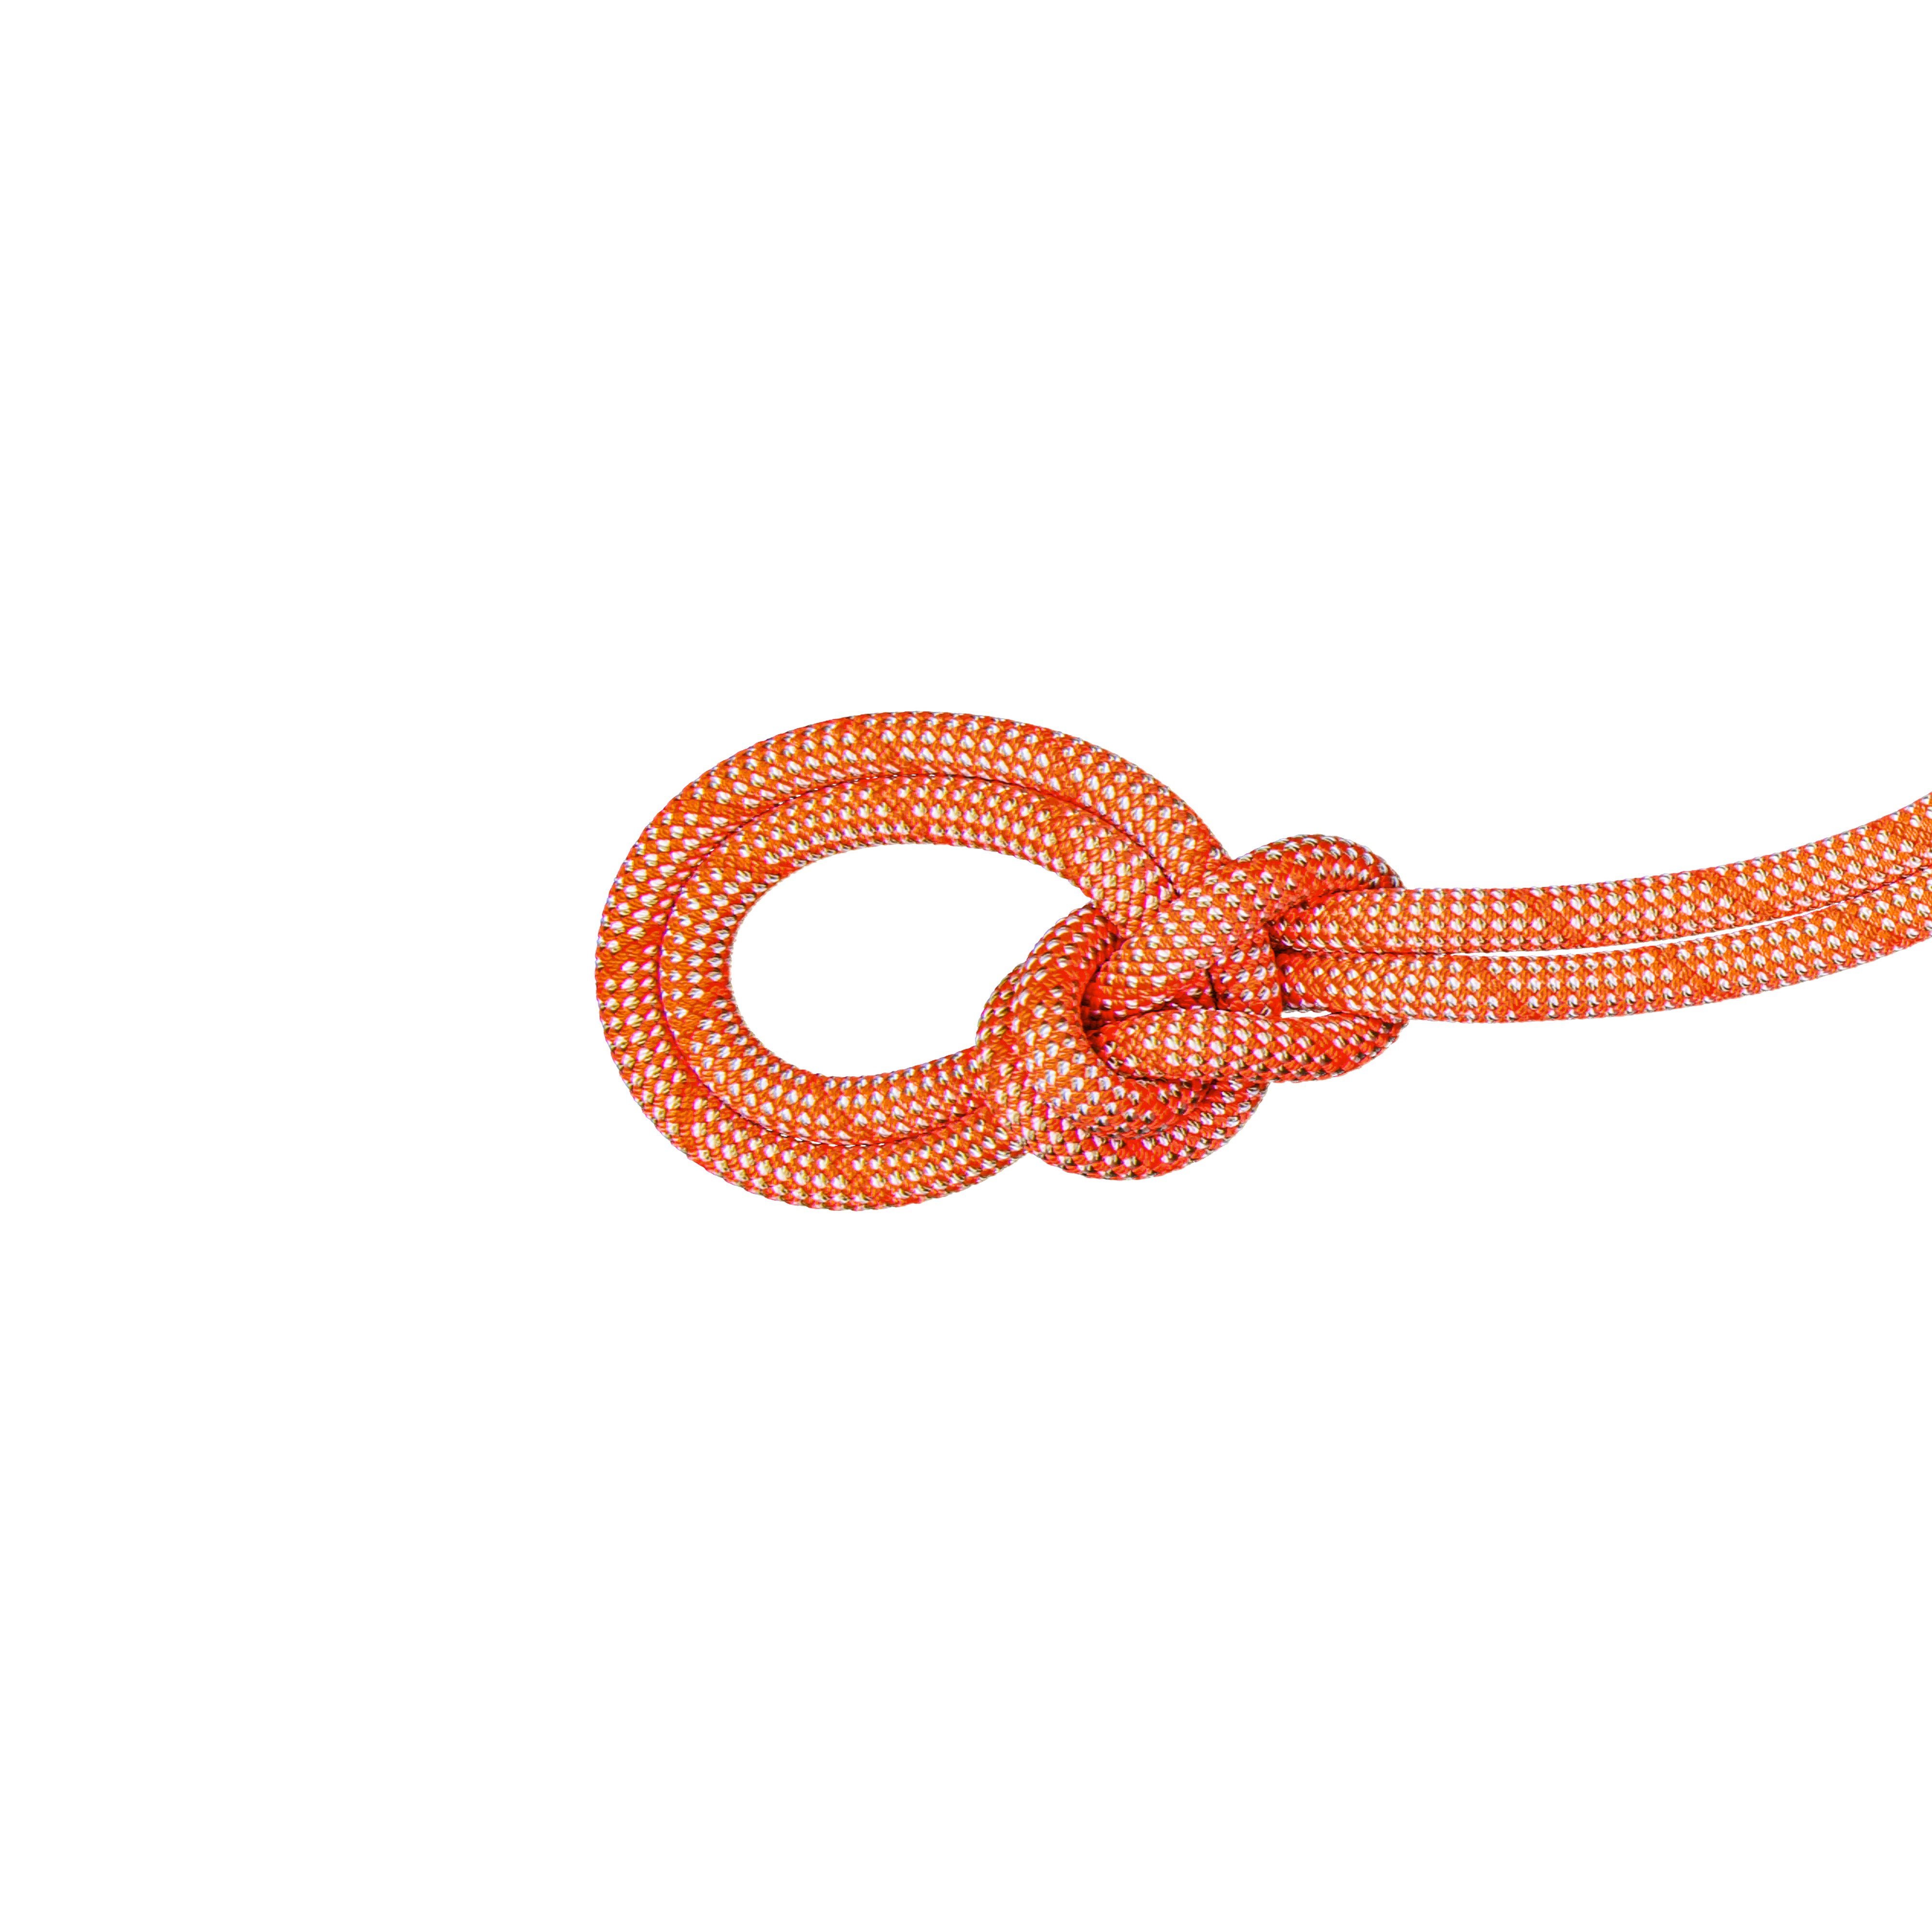 9.8 Crag Classic Rope - Classic Standard, orange-white, 40 m thumbnail